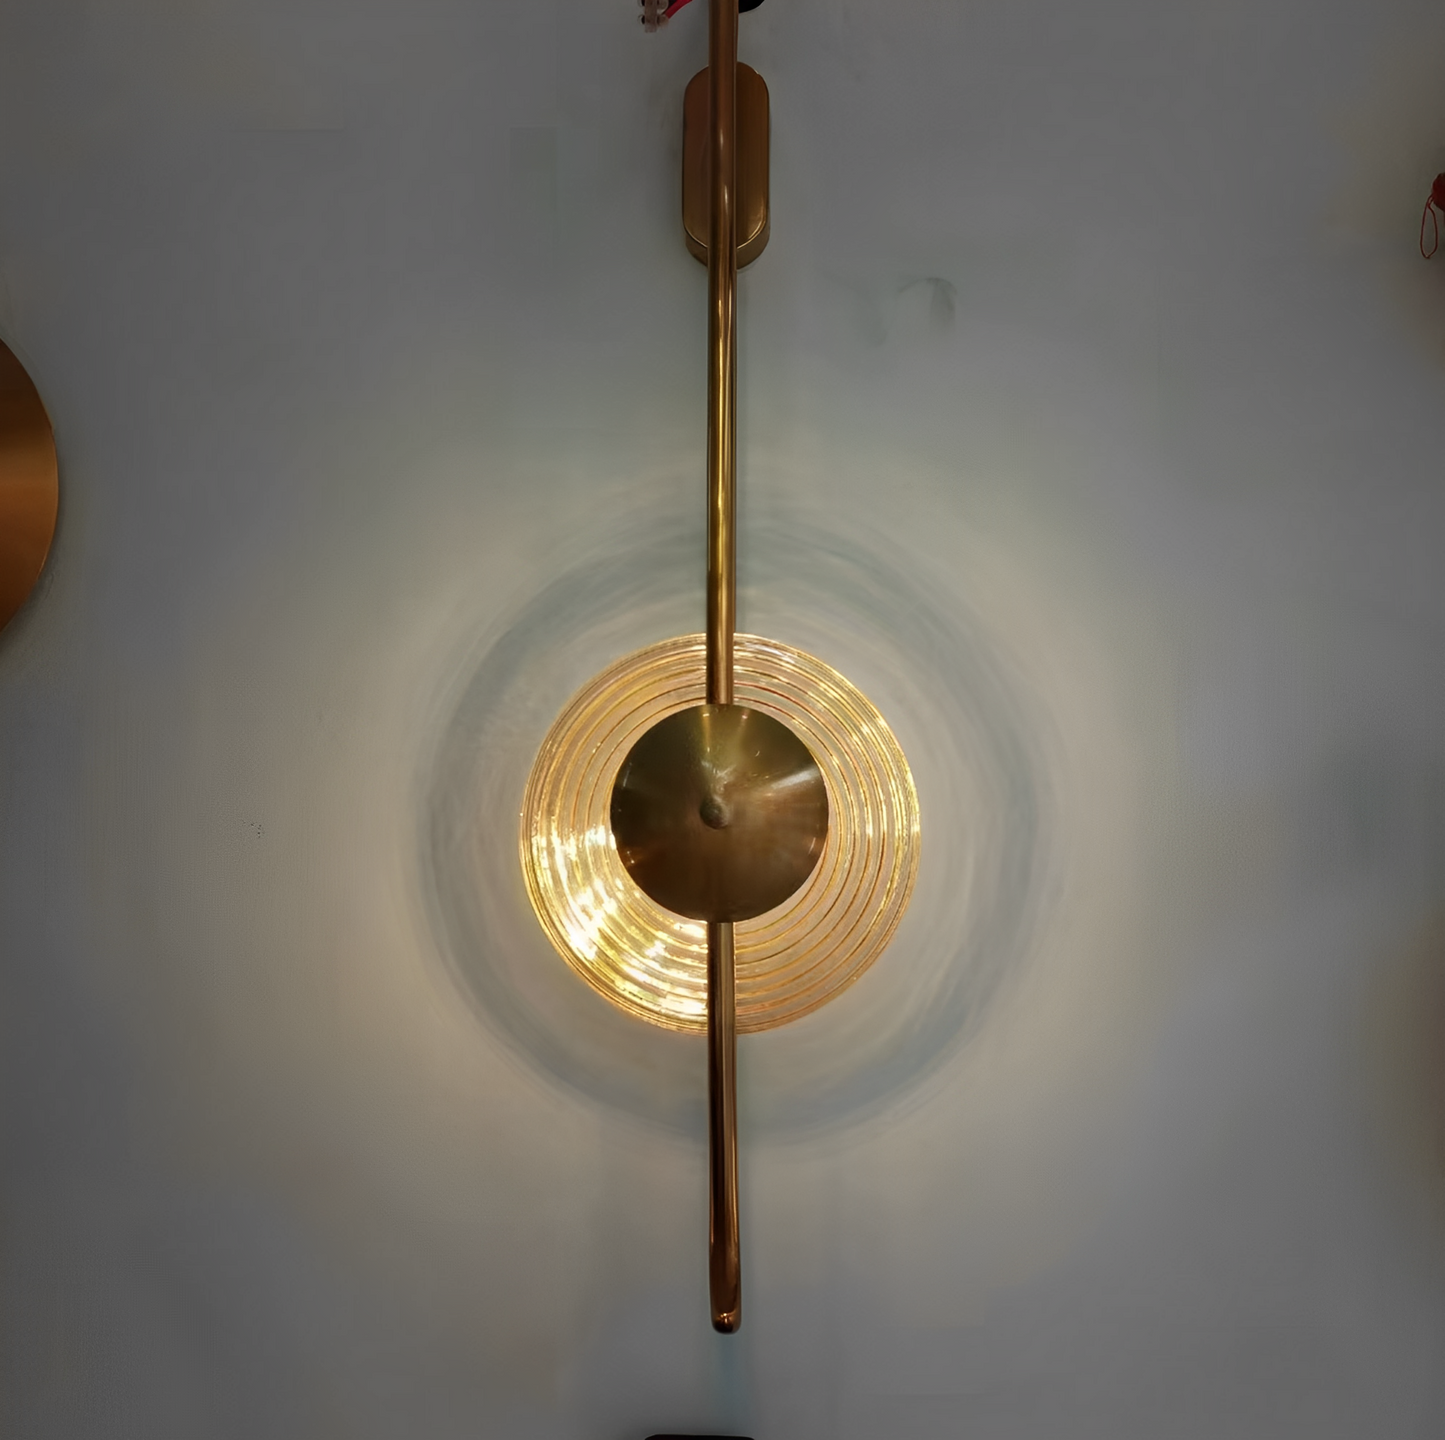 Premium Design Iron Wall Sconce Led Light by Gloss (B910)